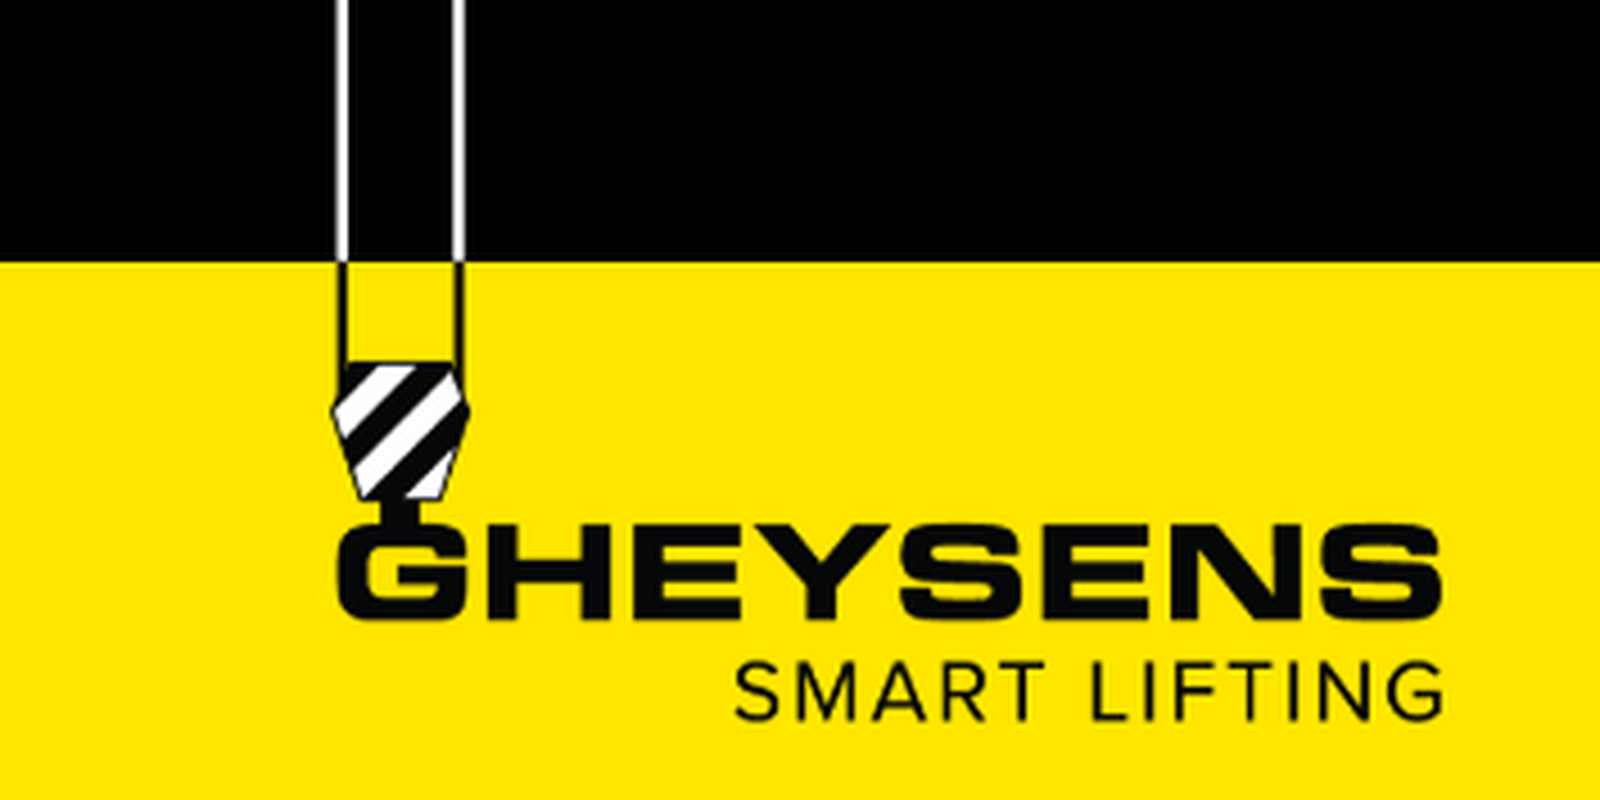 Gheysens logo.png